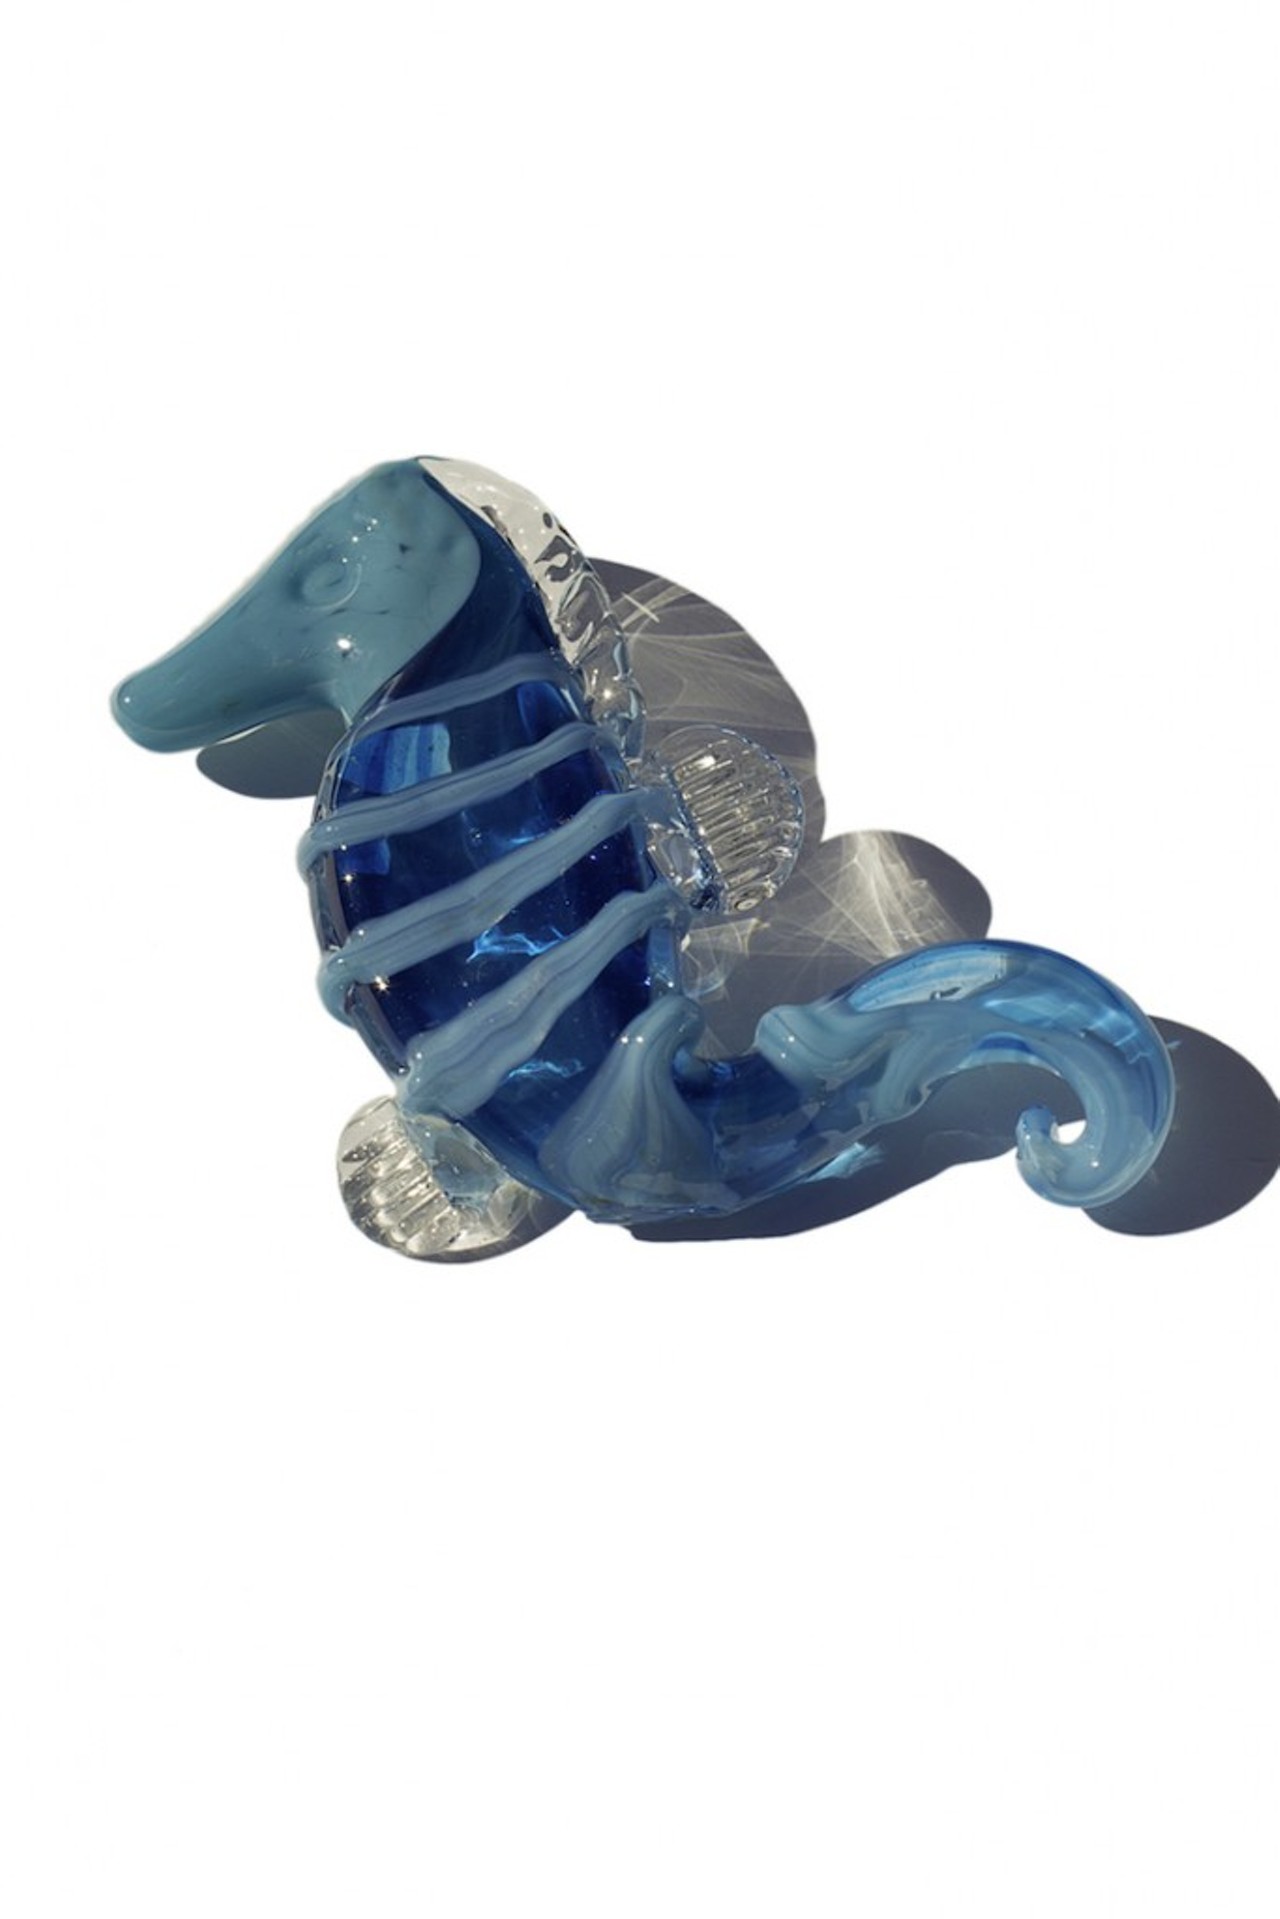 Turquoise seahorse $35